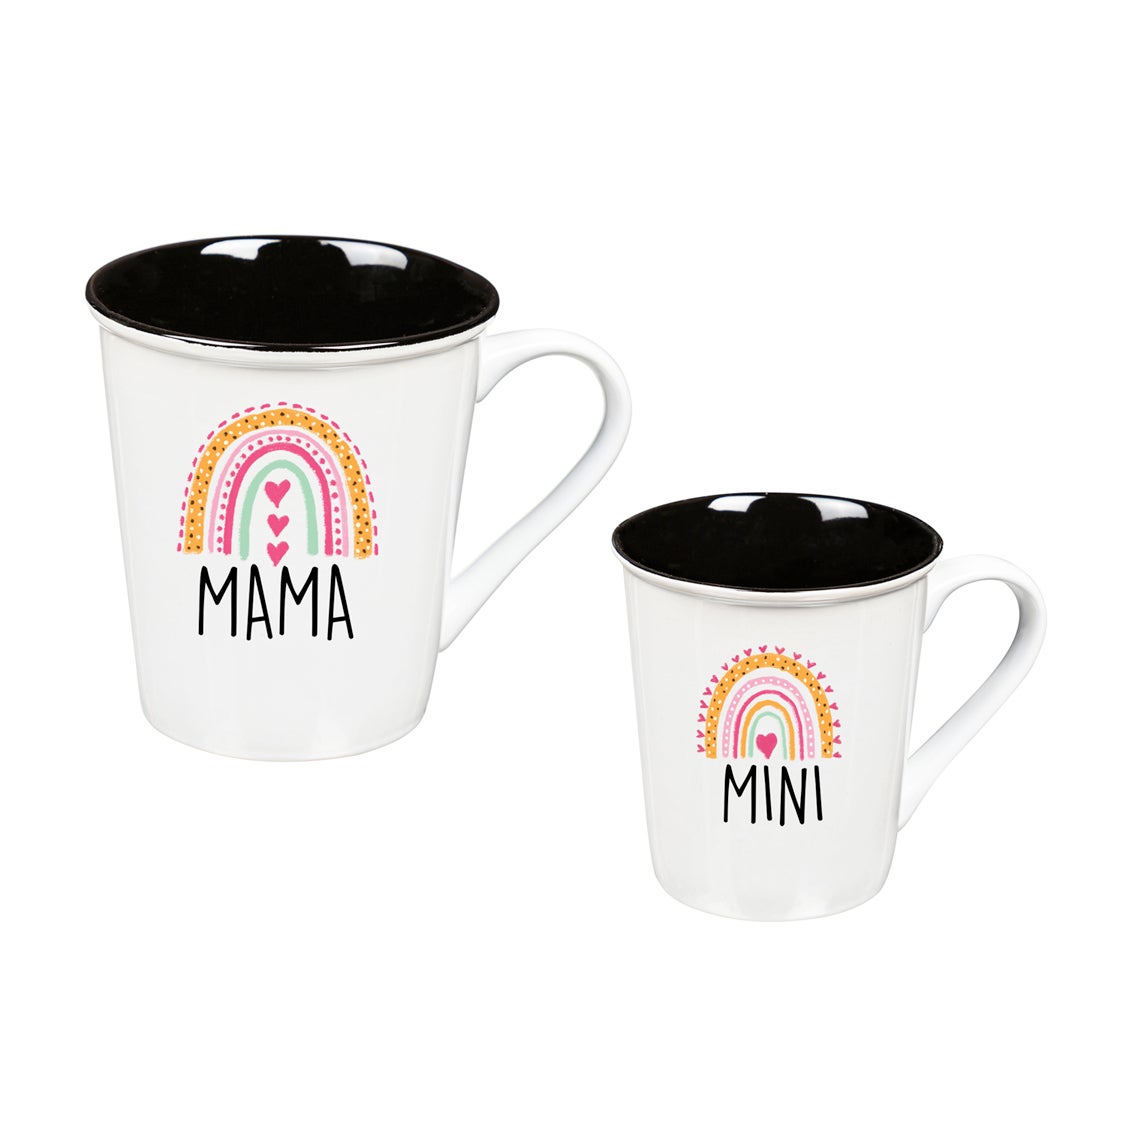 Mommy and Me Ceramic Cup Gift Set, 16 oz. Mama Mug, 8 oz. Mini Mug